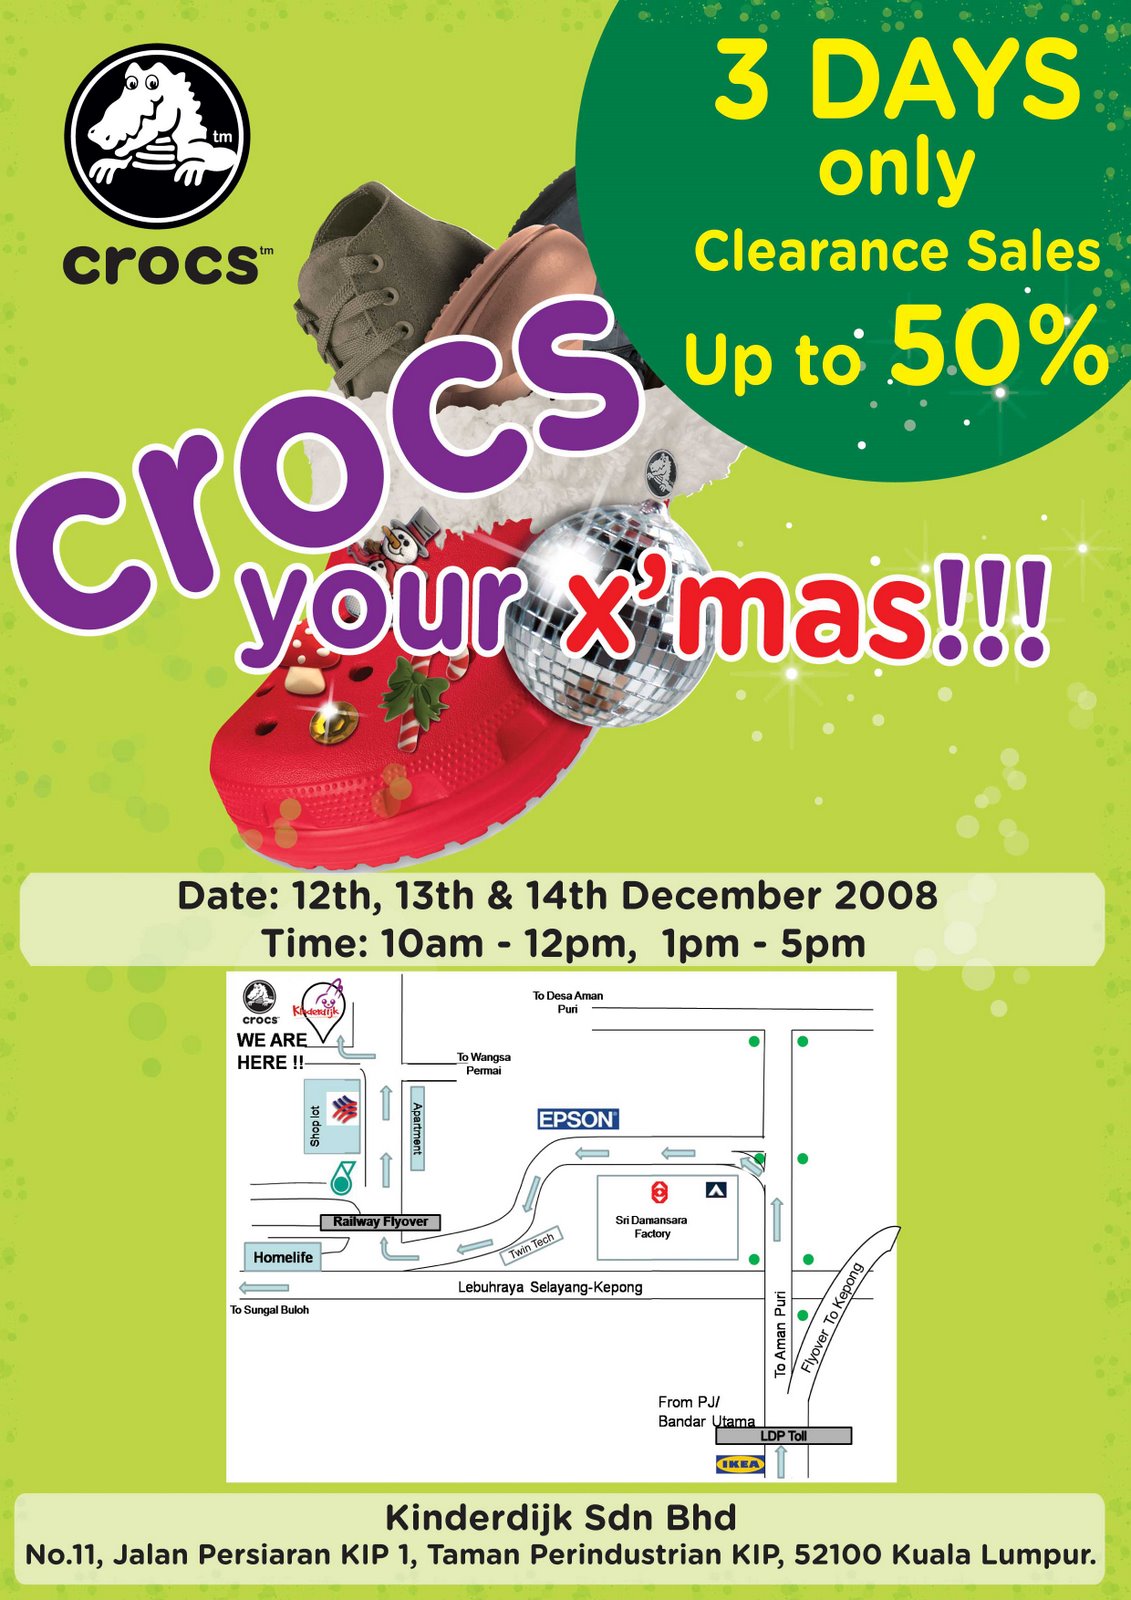 Crocs Warehouse Sales